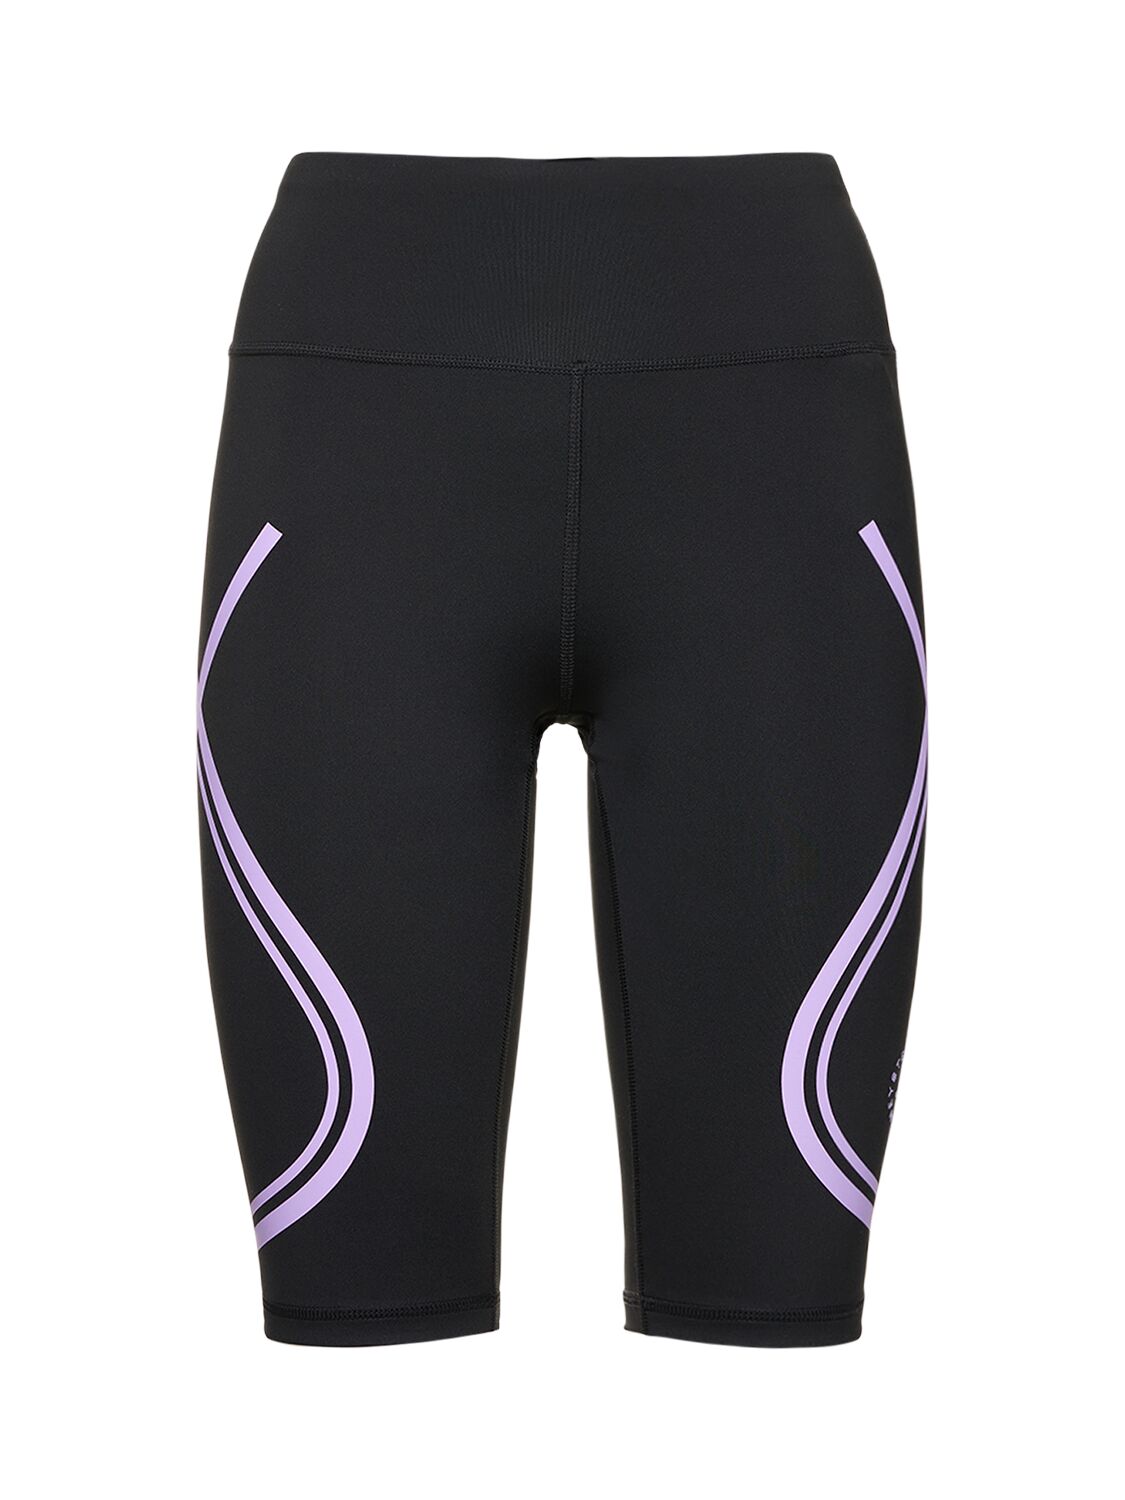 Adidas By Stella Mccartney Active Shorts In Black/purple Glow